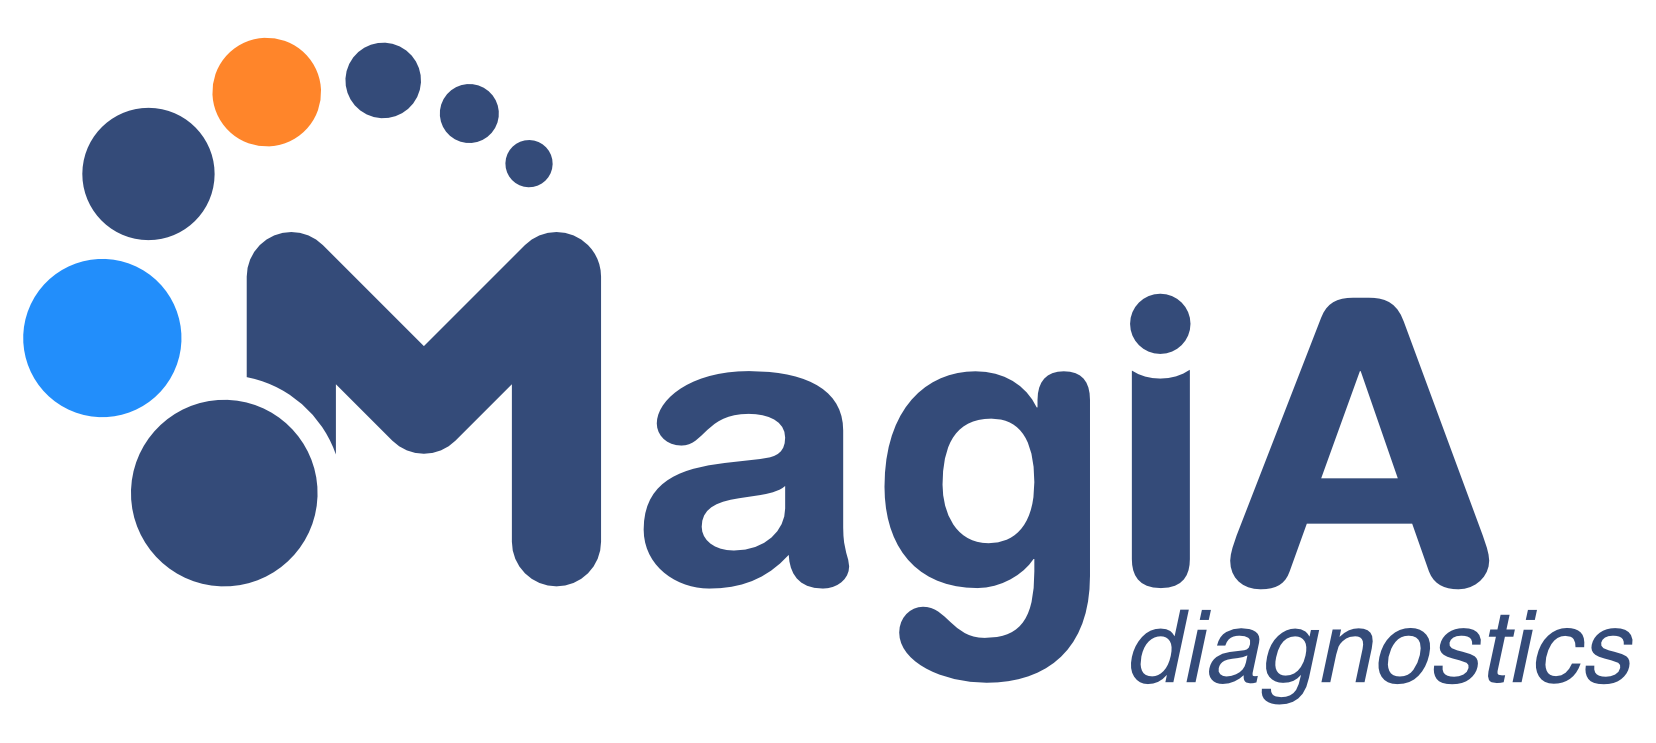 MagIA diagnostics